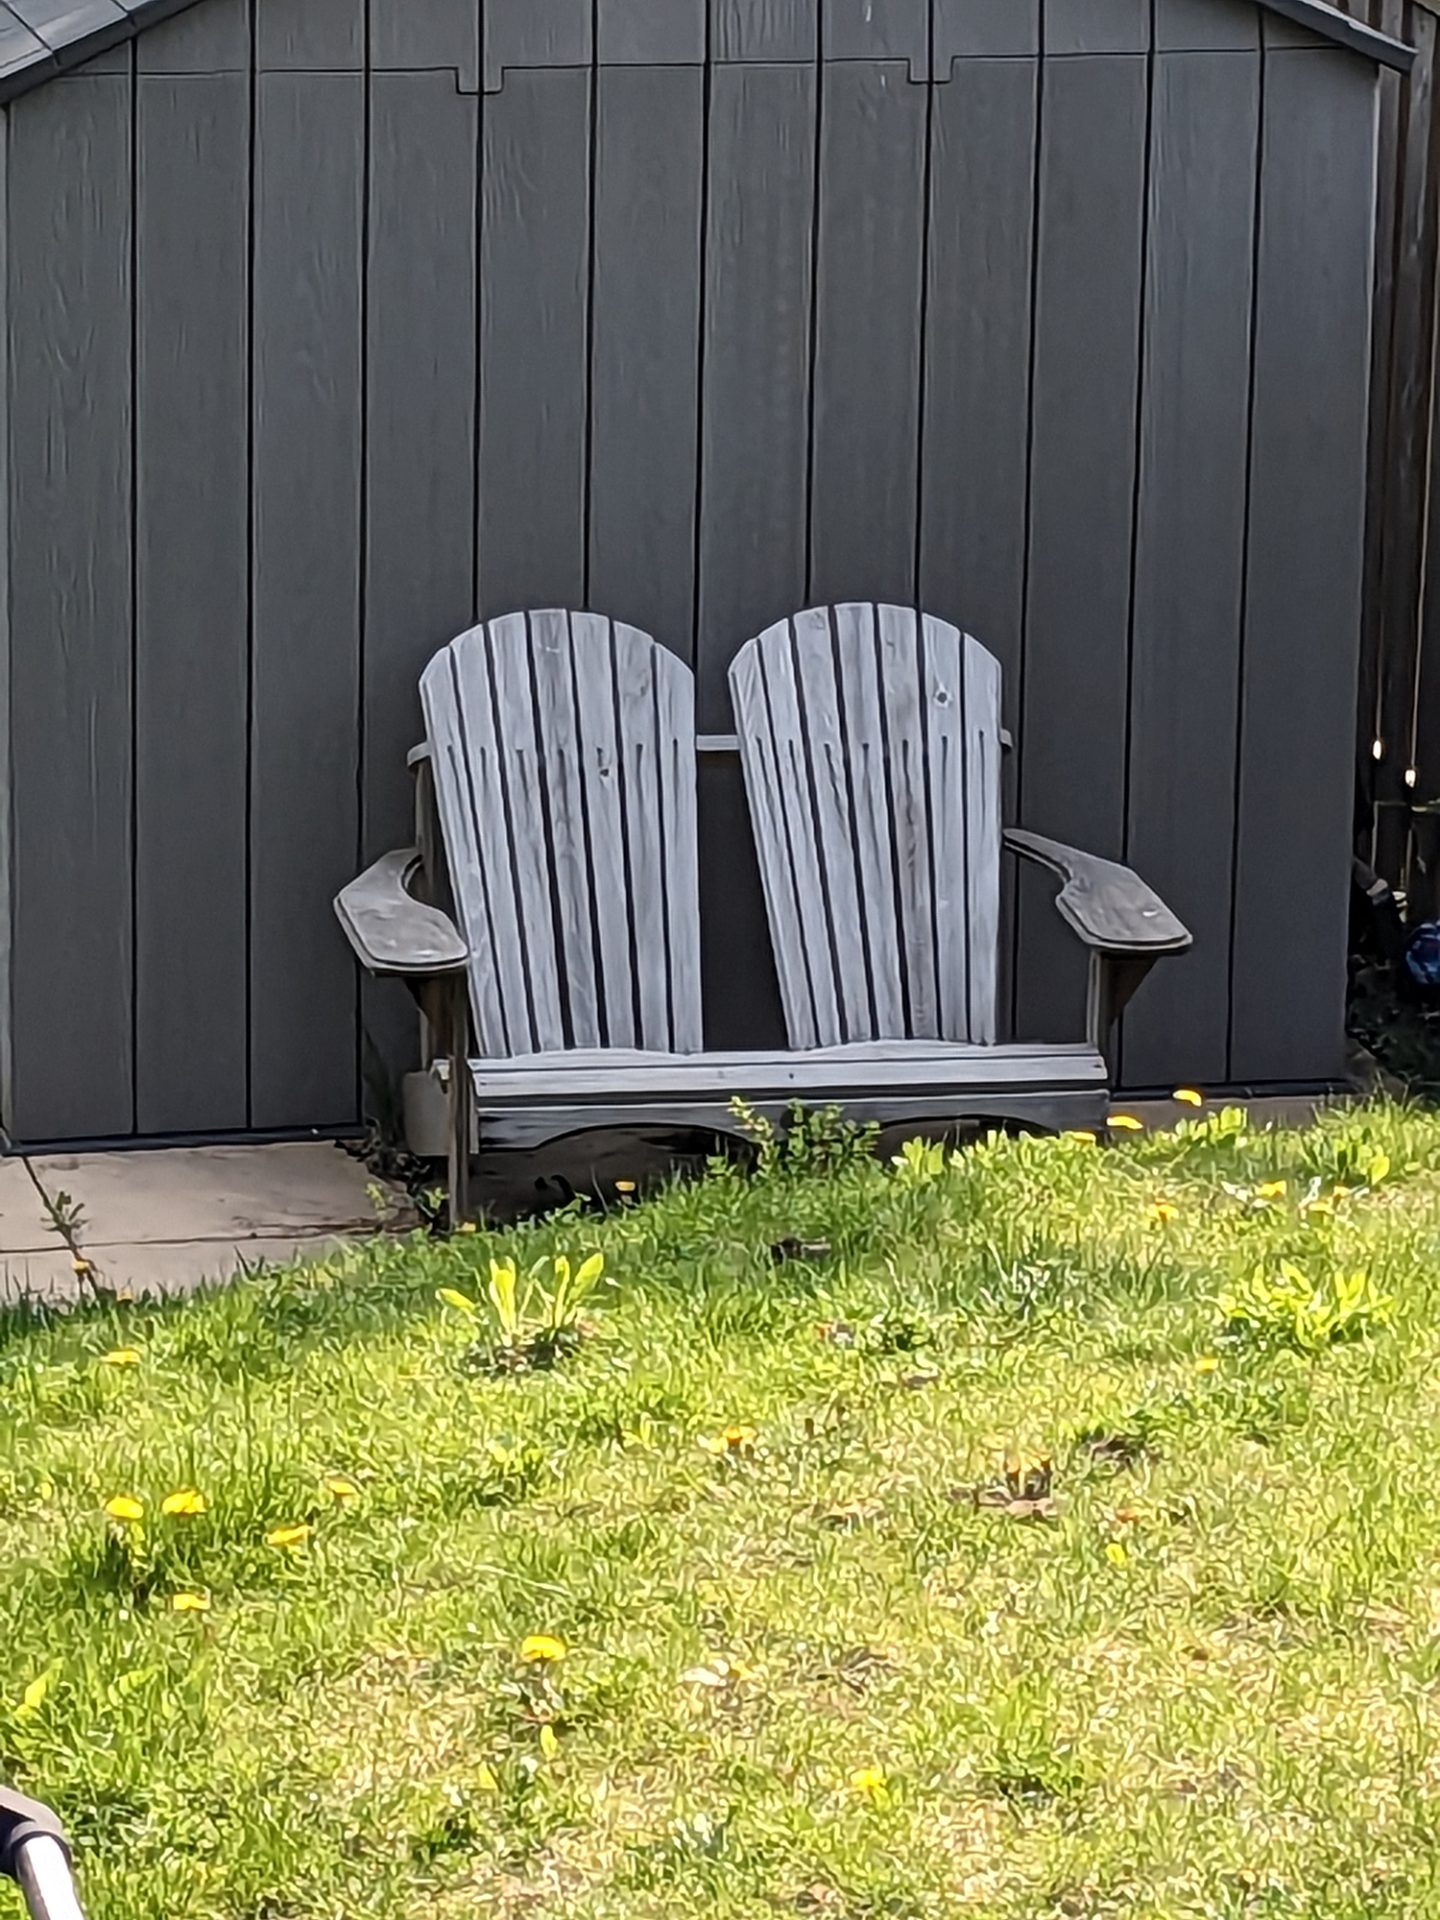 Muskoka chair photo taken with Pixel 6a